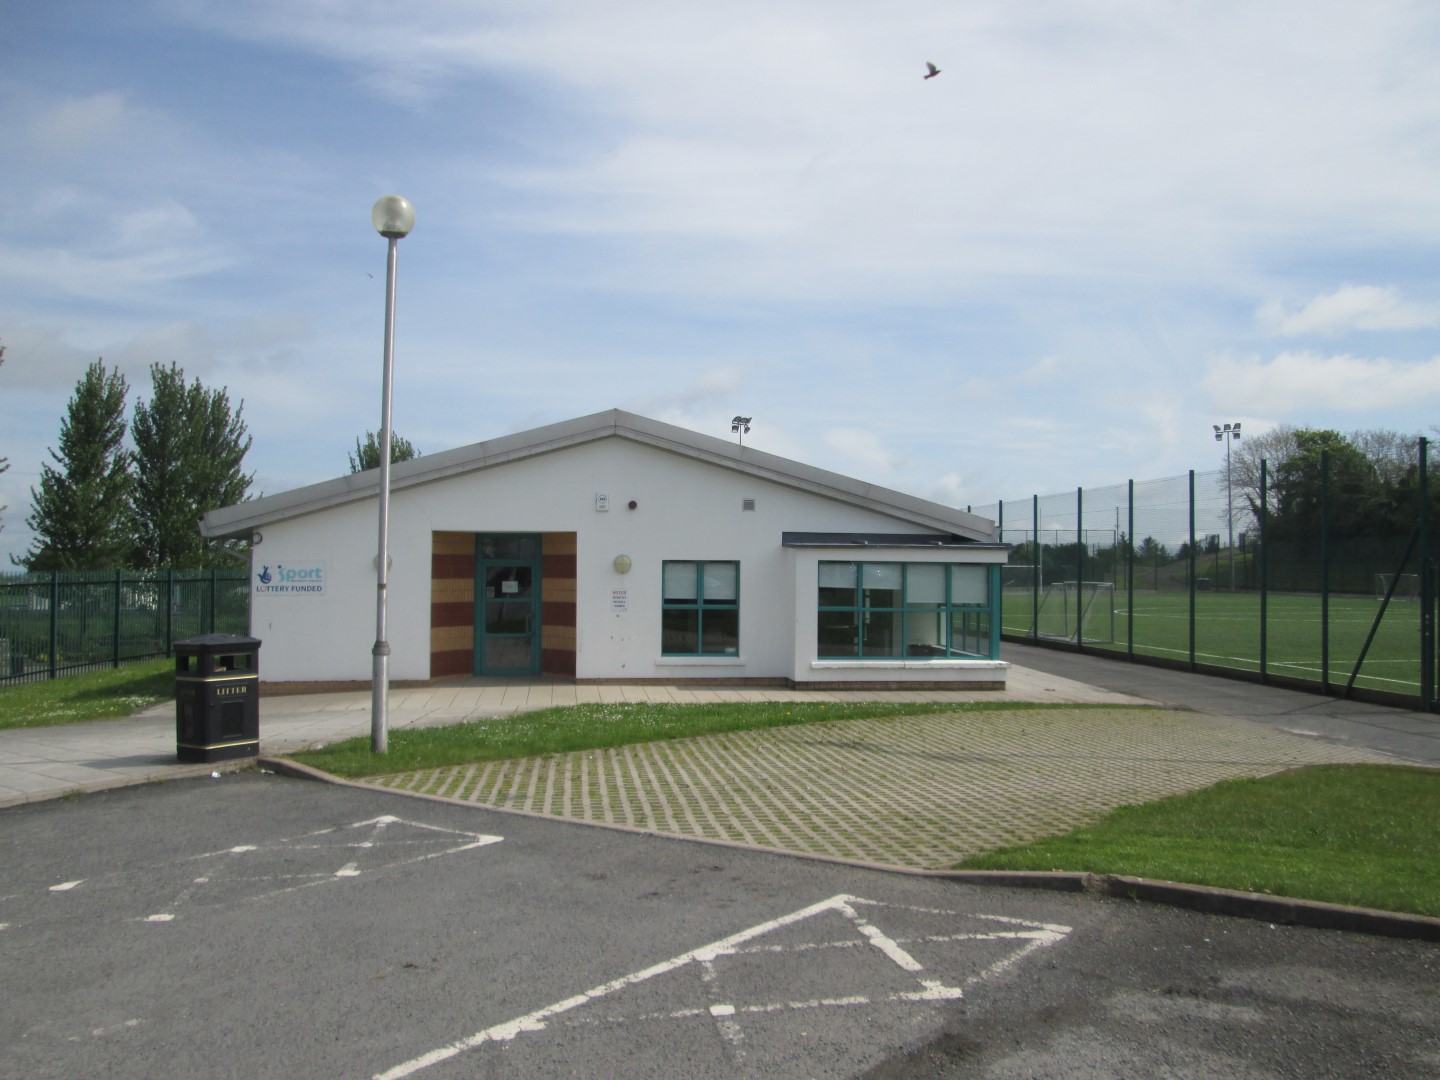 Keady Recreation Centre Pavilion